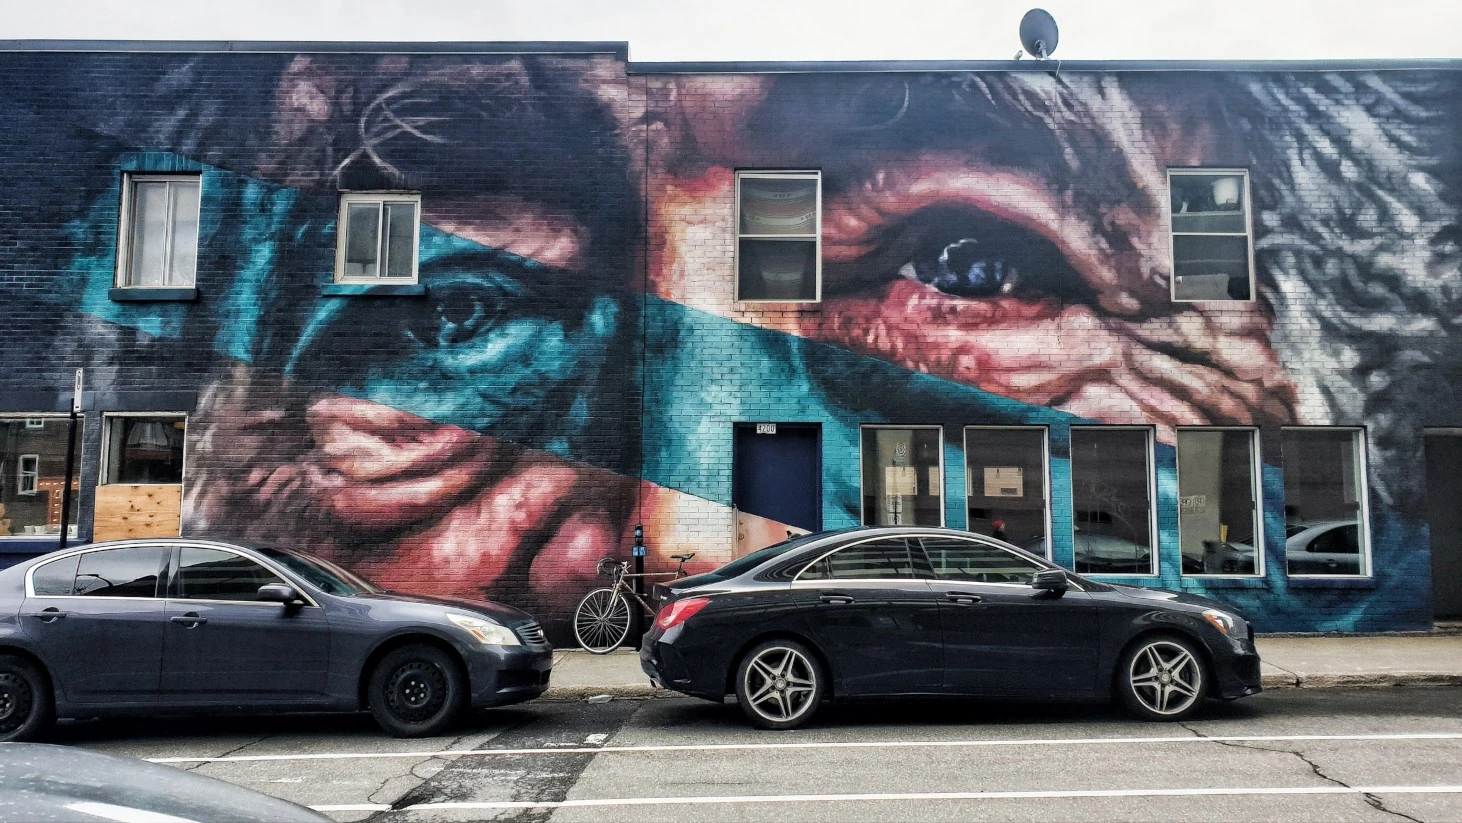 Street art in Montreal